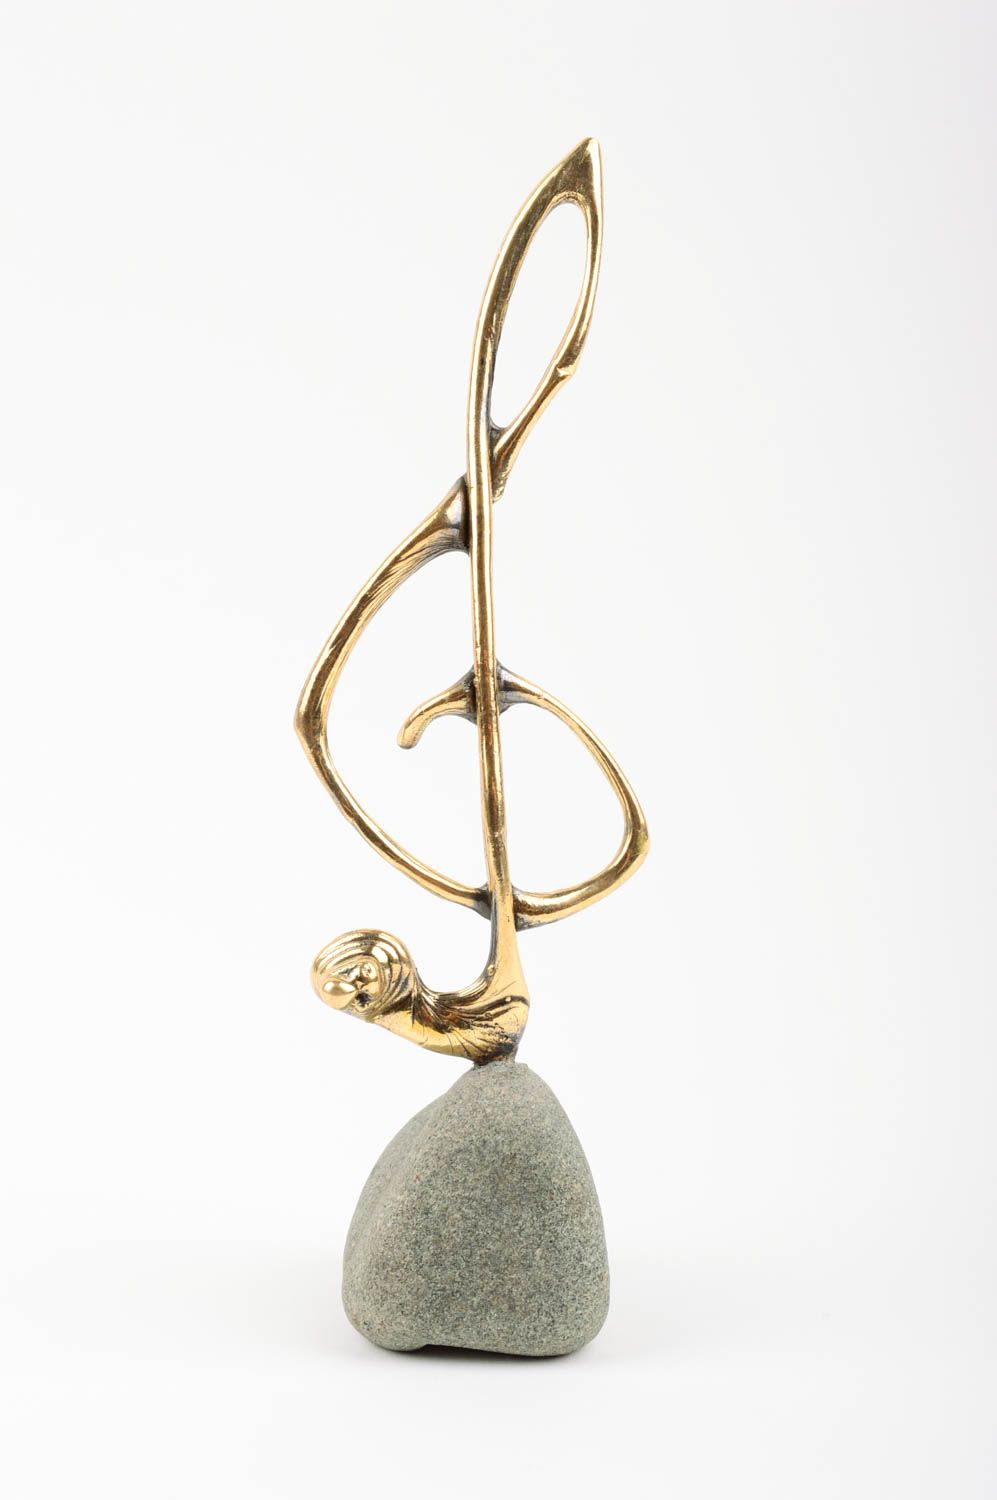 Designer unusual statuette jewelry made of brass handmade stylish accessory photo 1